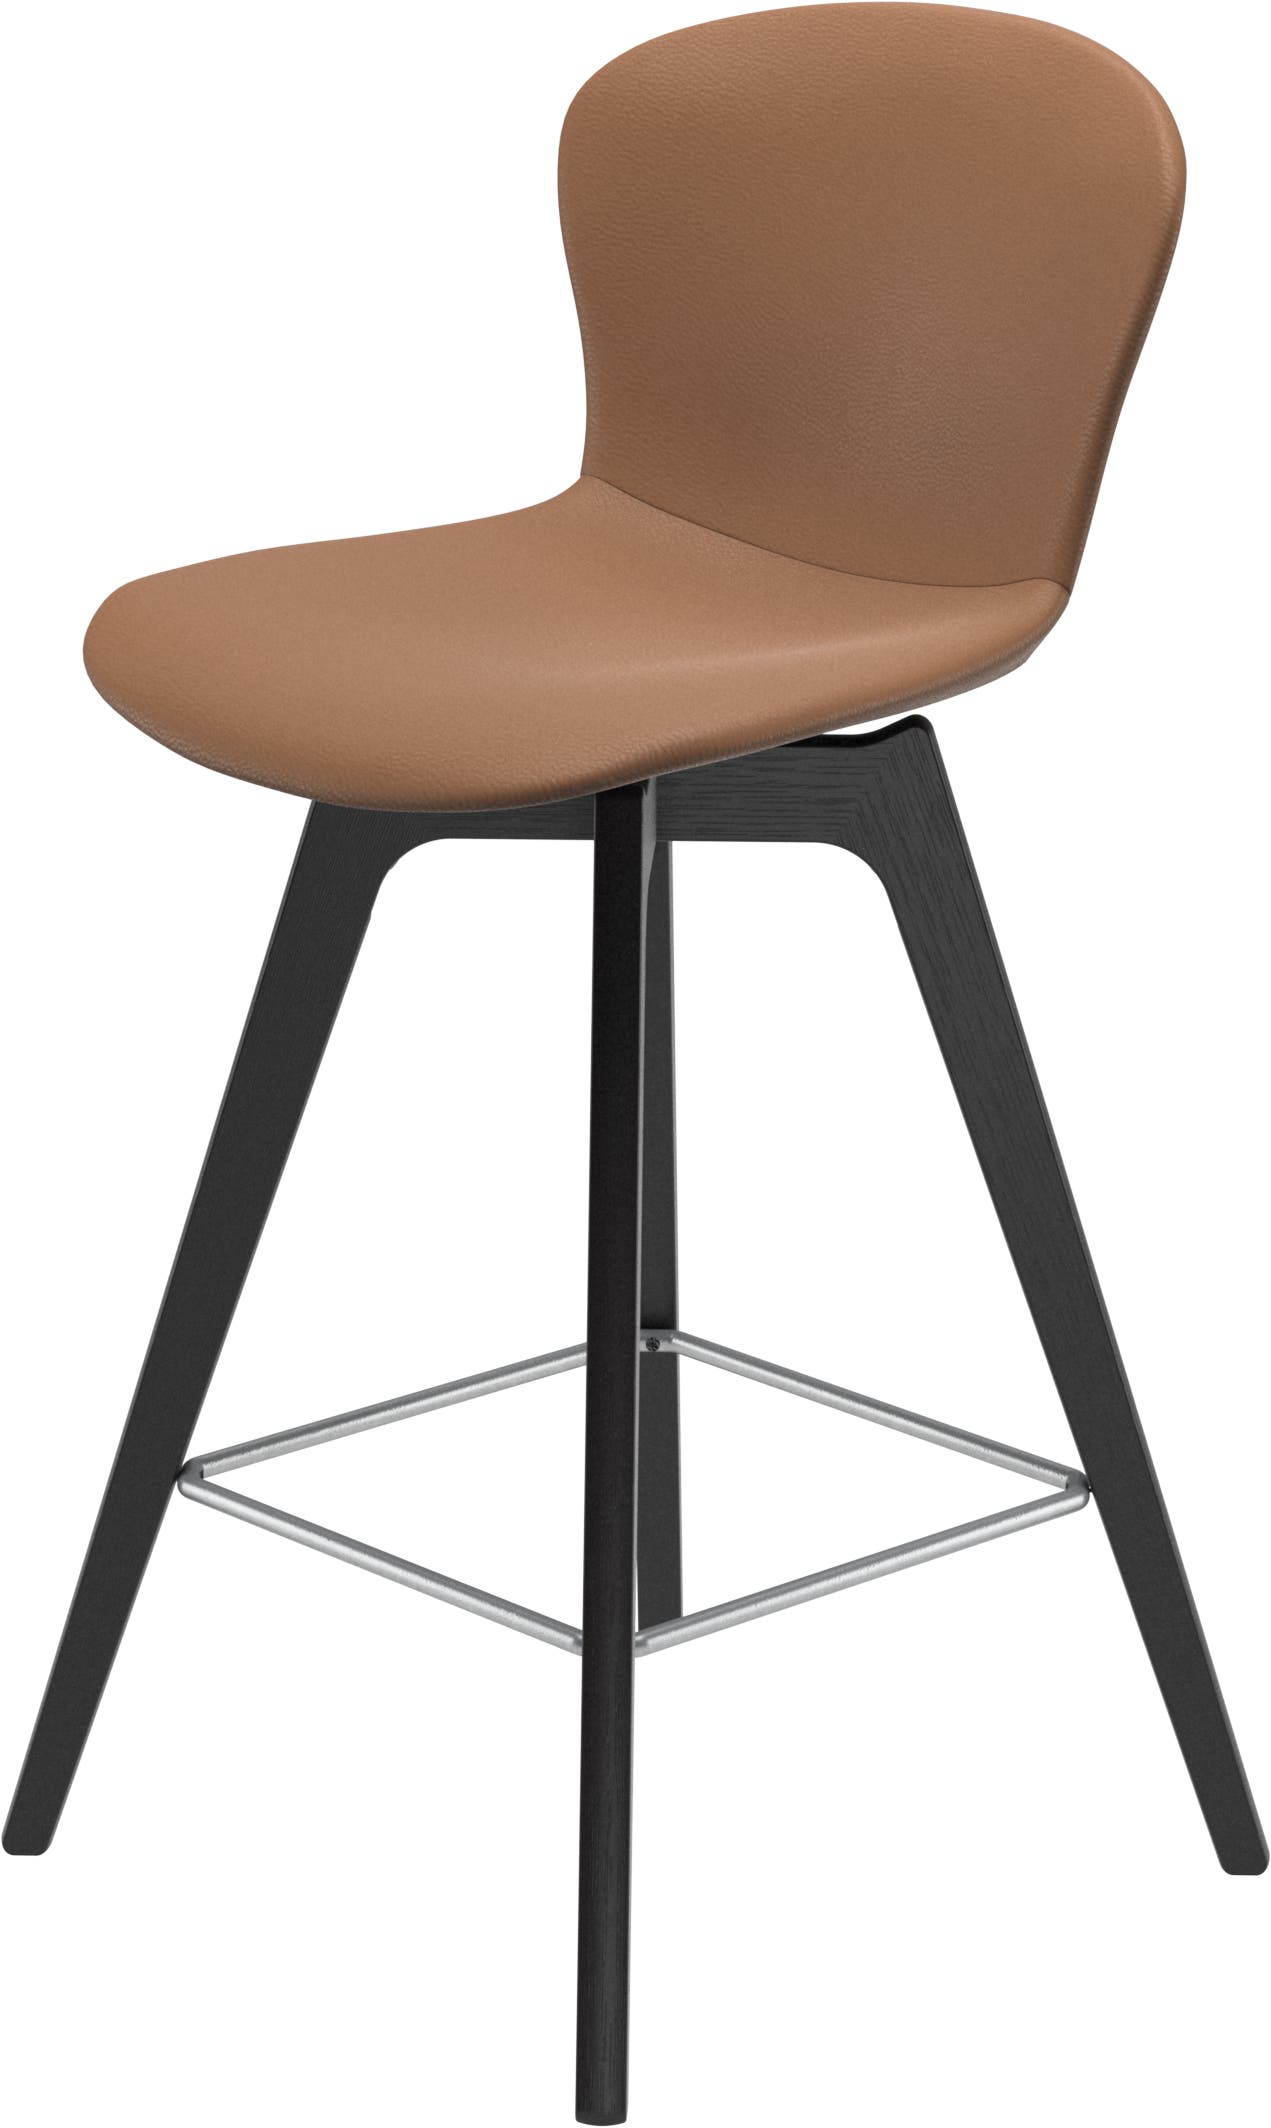 Barová židle Adelaide